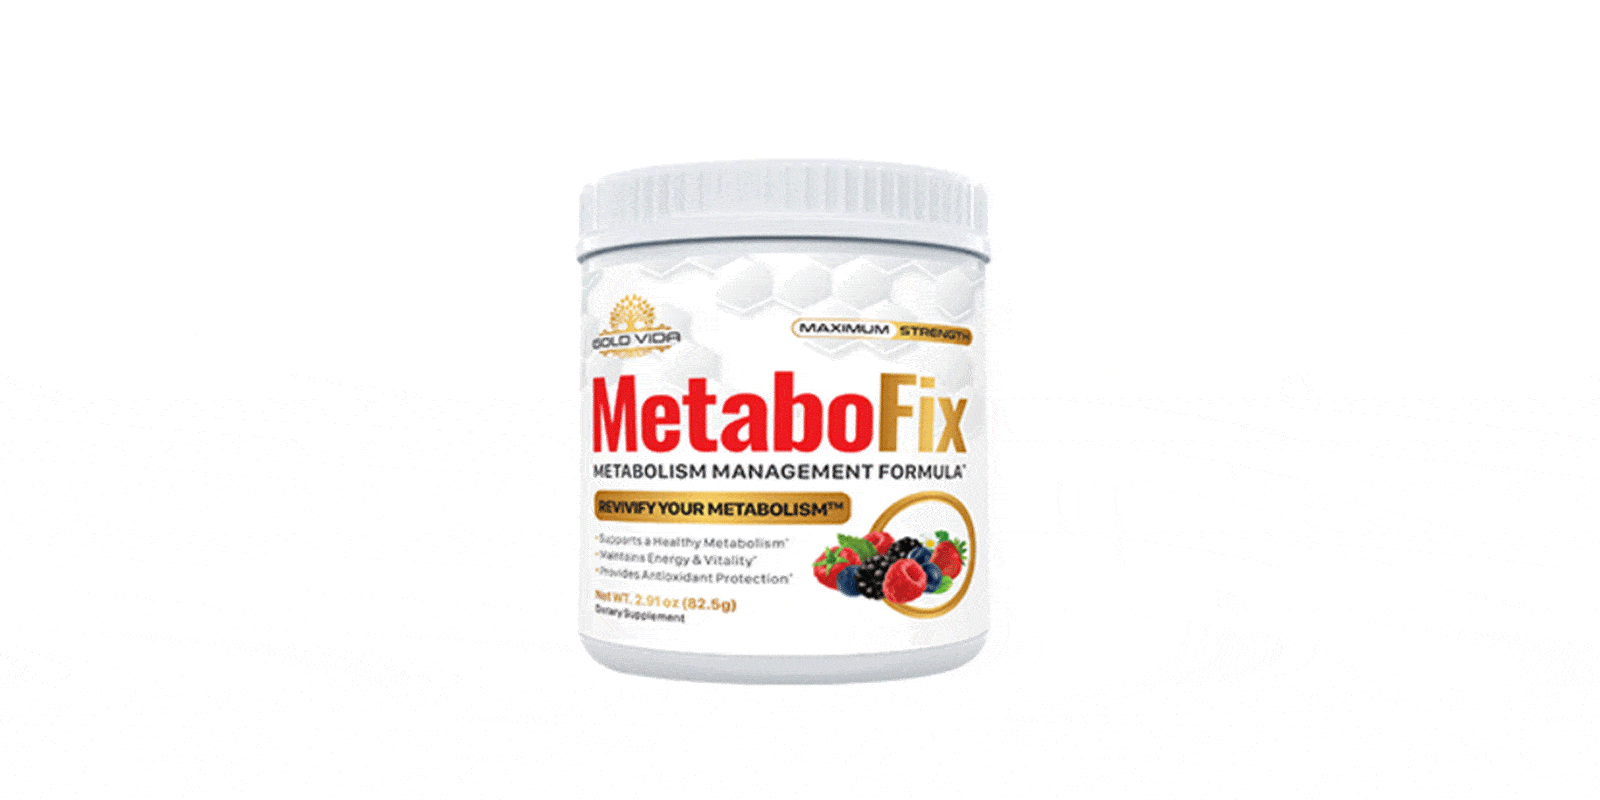 MetaboFix Supplement Customer Reviews